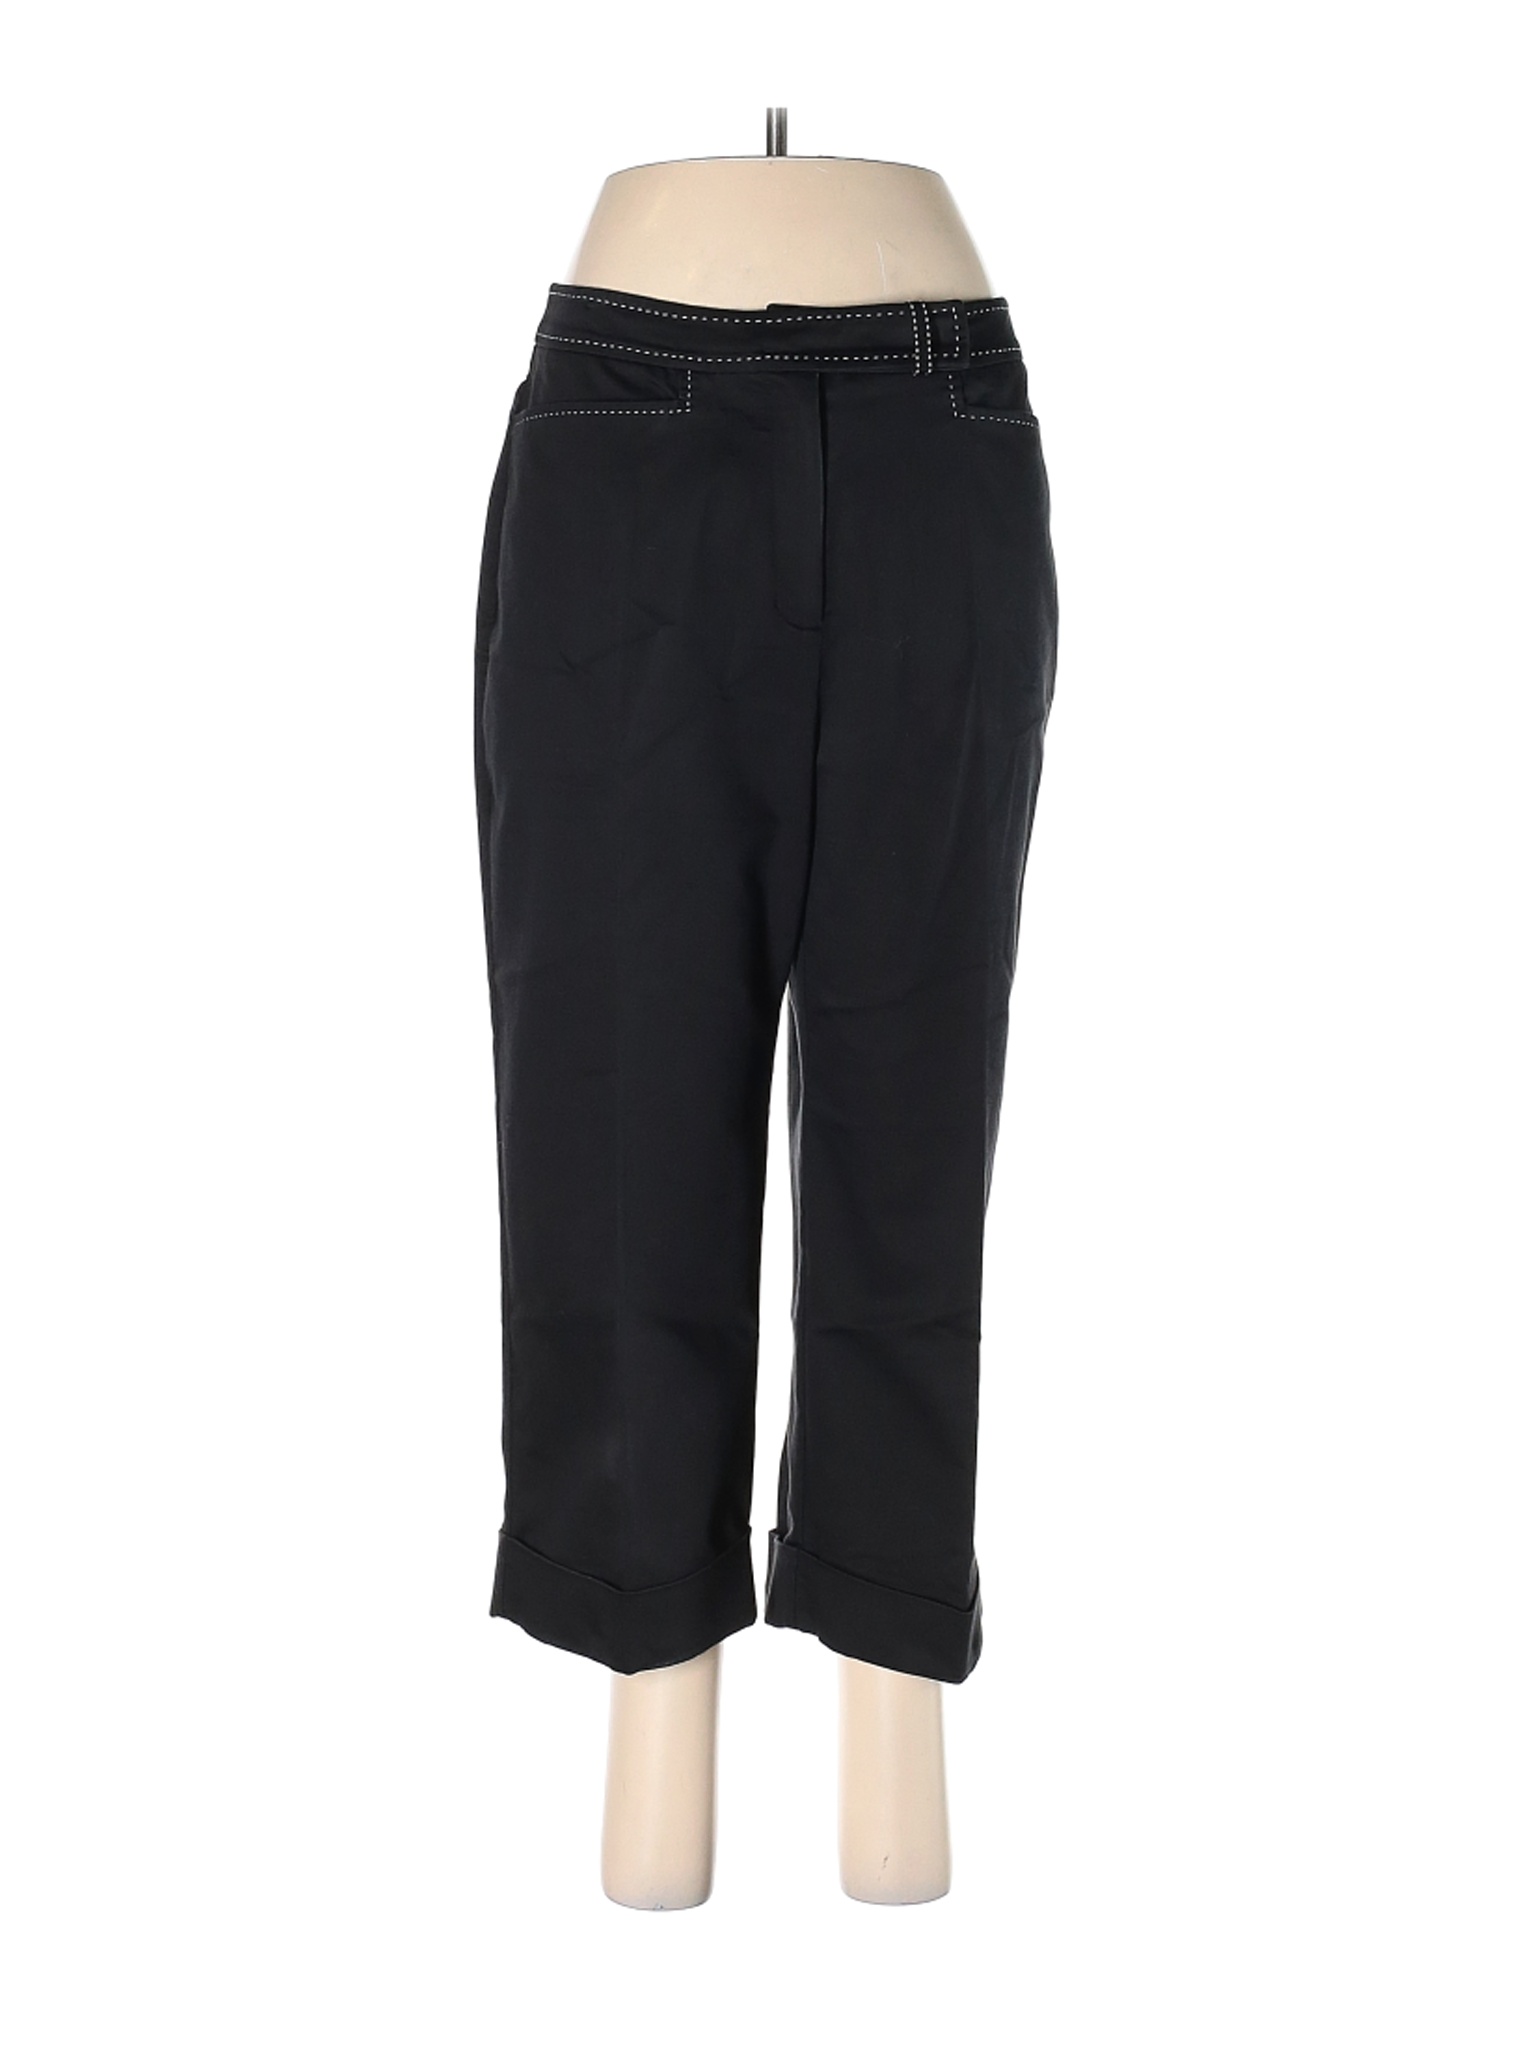 Koret Women Black Dress Pants 8 | eBay